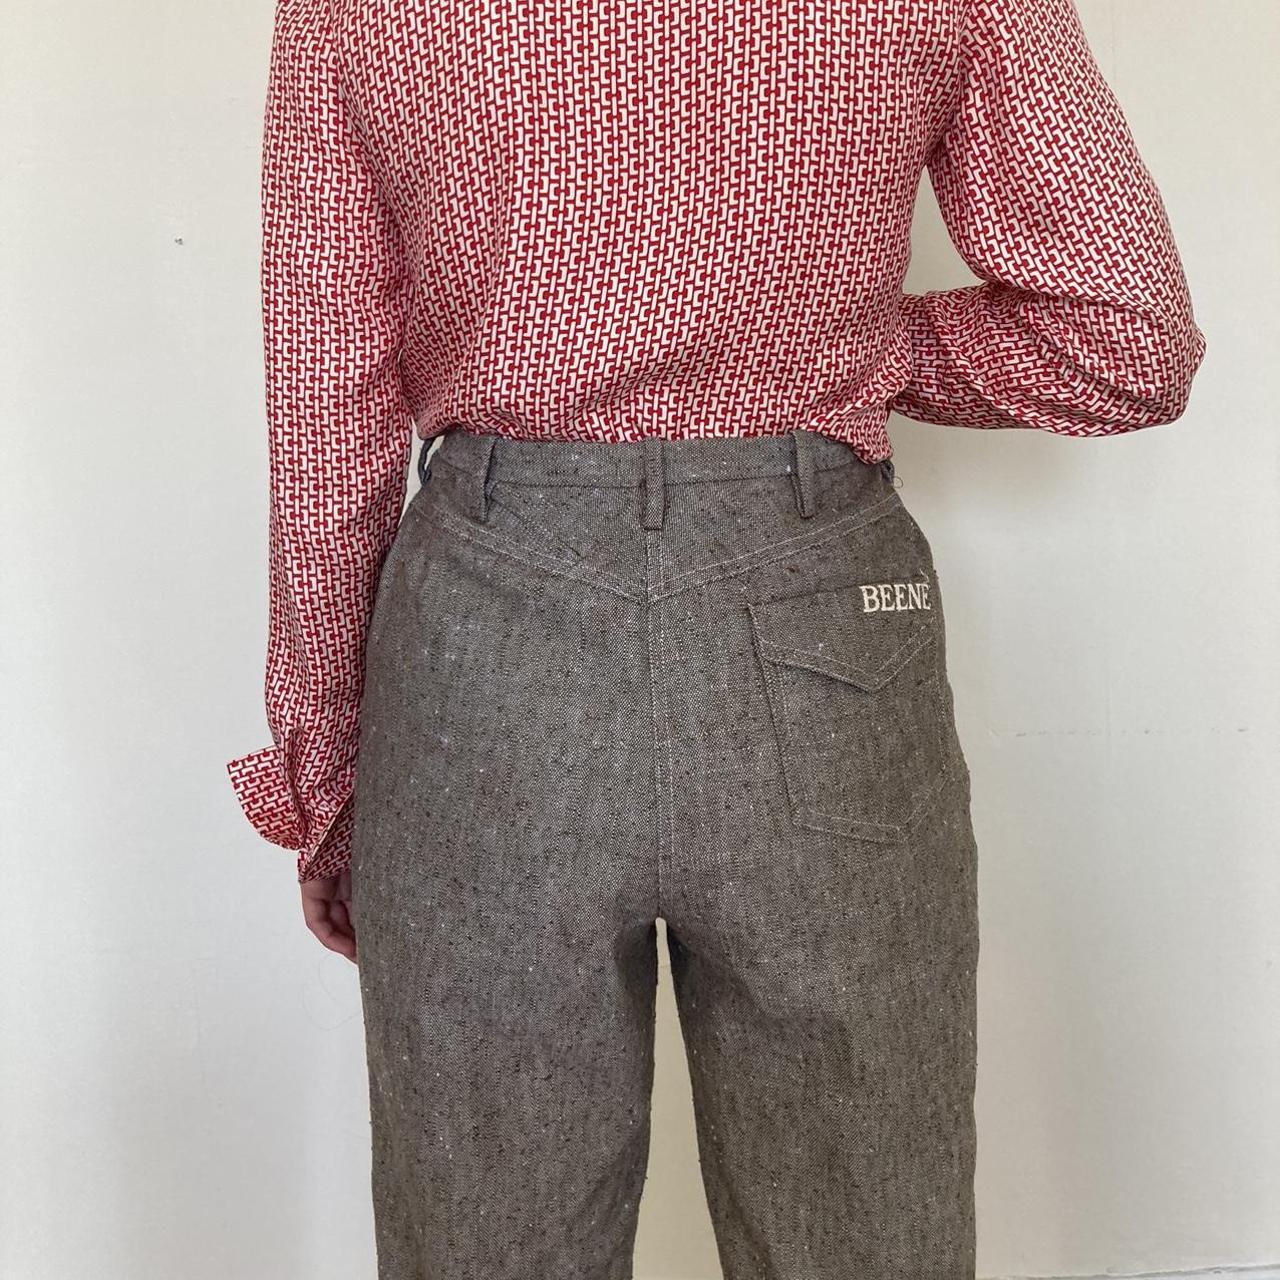 Geoffrey Beene Pleated Dress Pants Pants for Men | Mercari